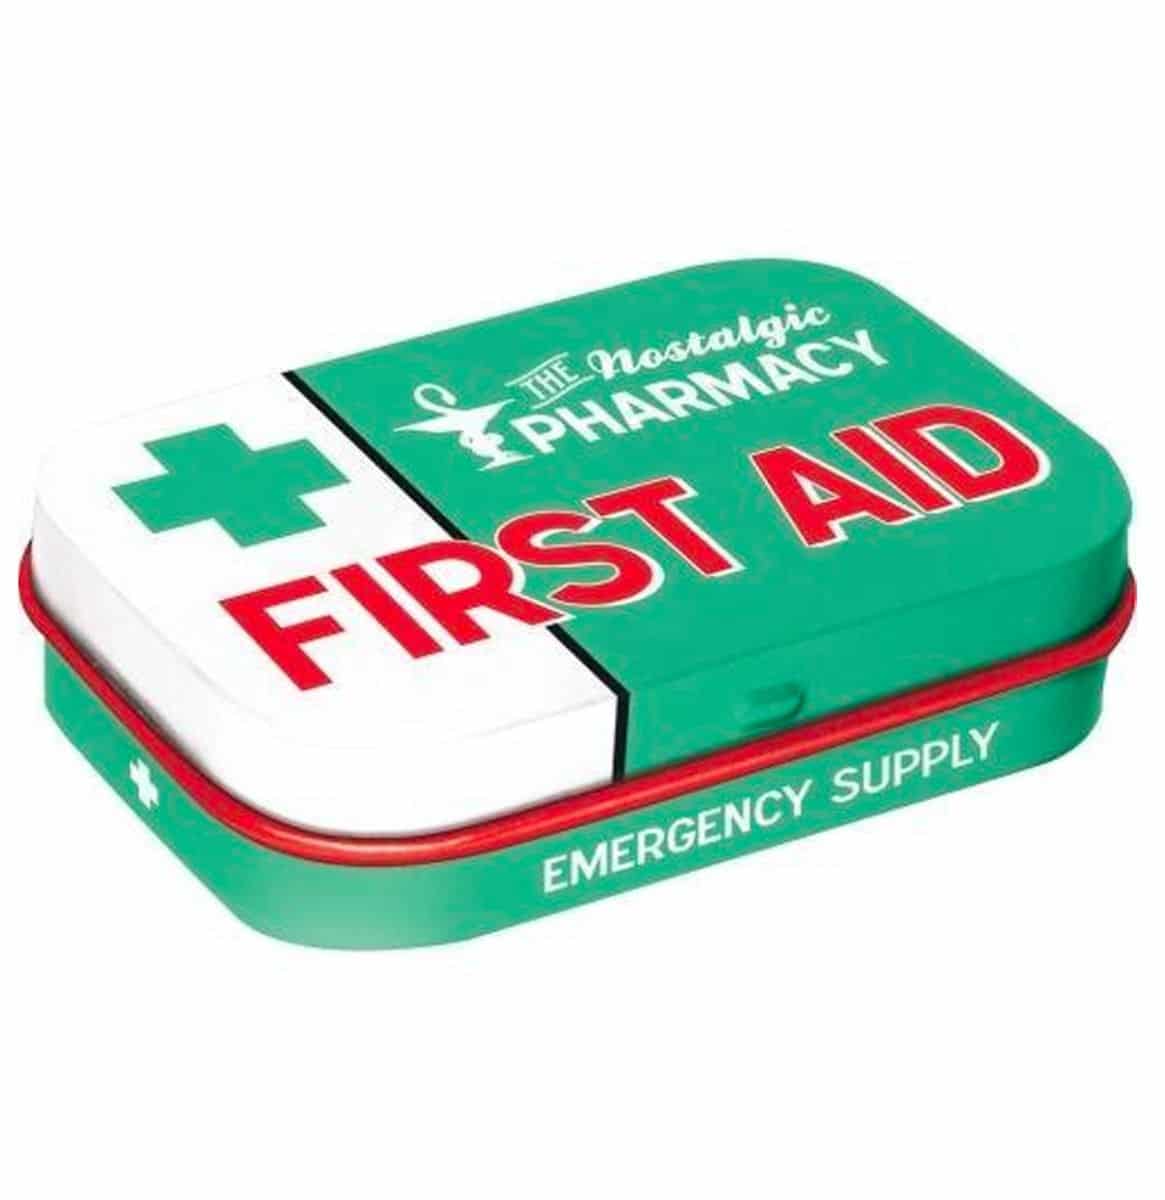 Mint First Aid Kit met Muntsnoepjes